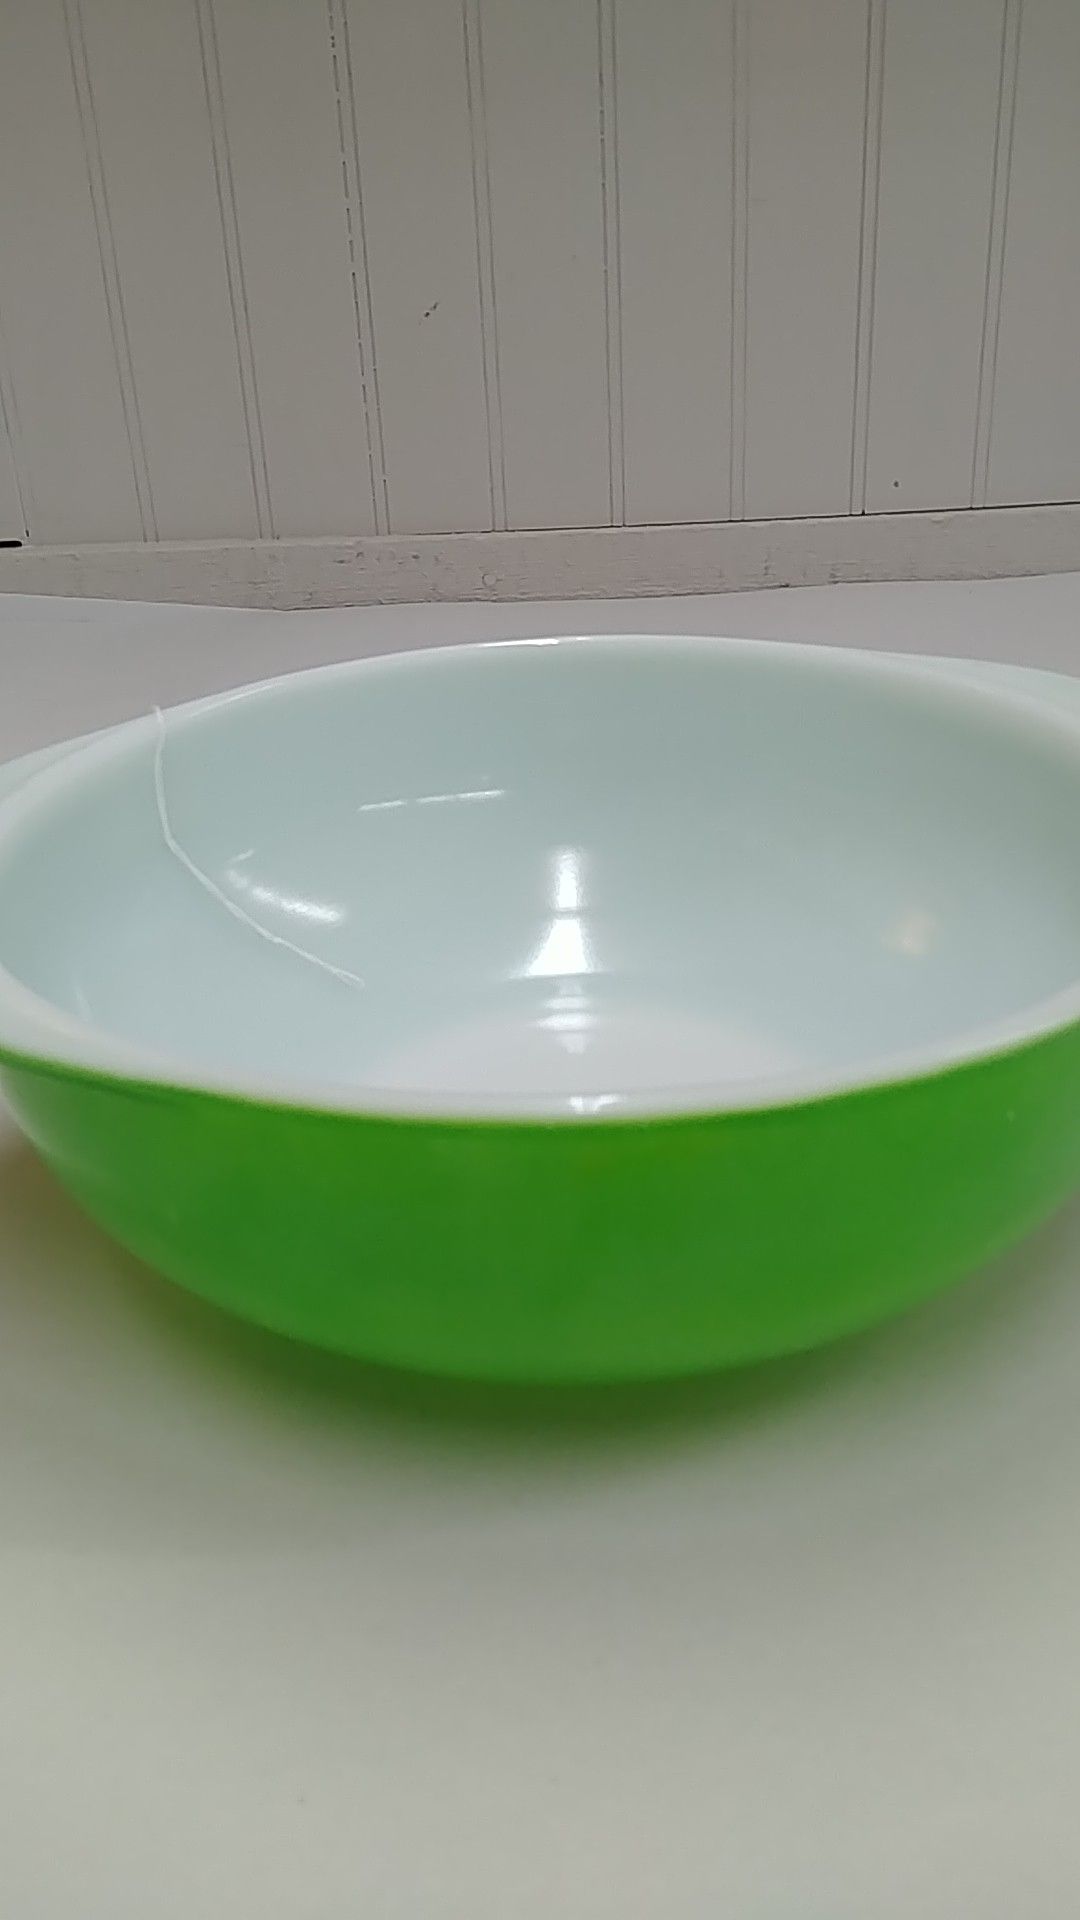 Green Pyrex dish